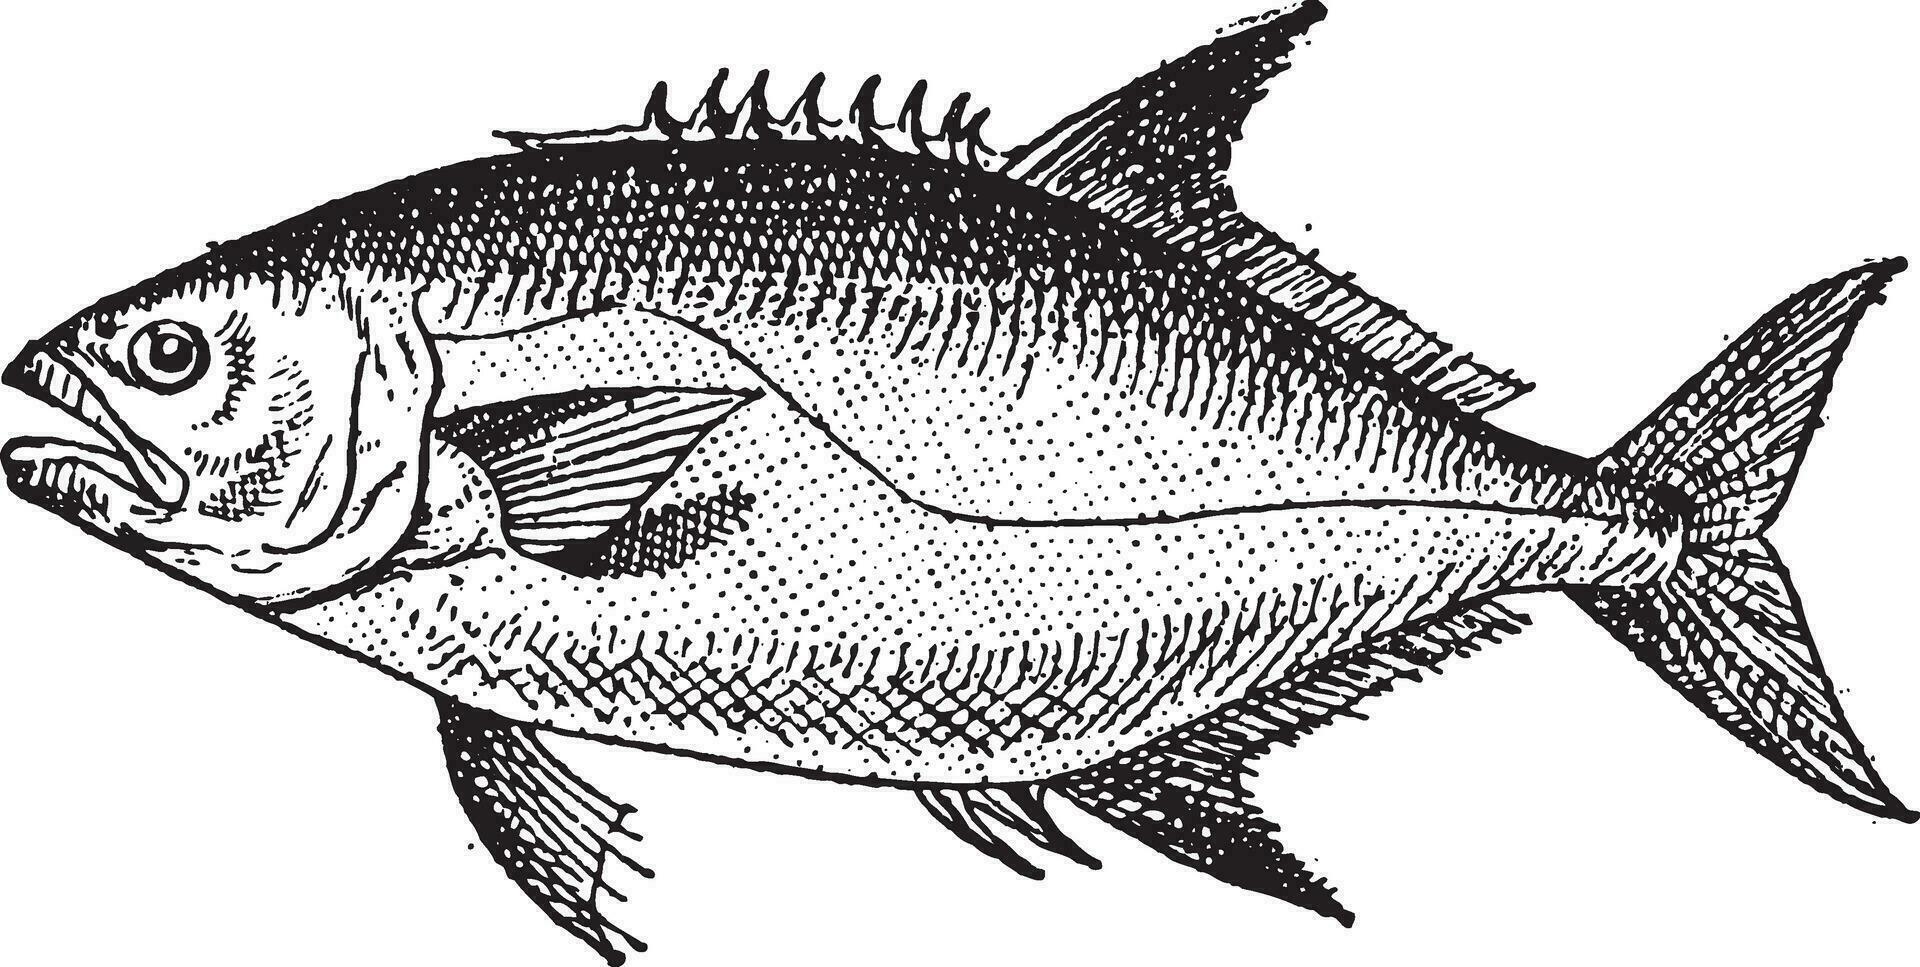 Leerfish or Lichia amia, vintage engraving vector